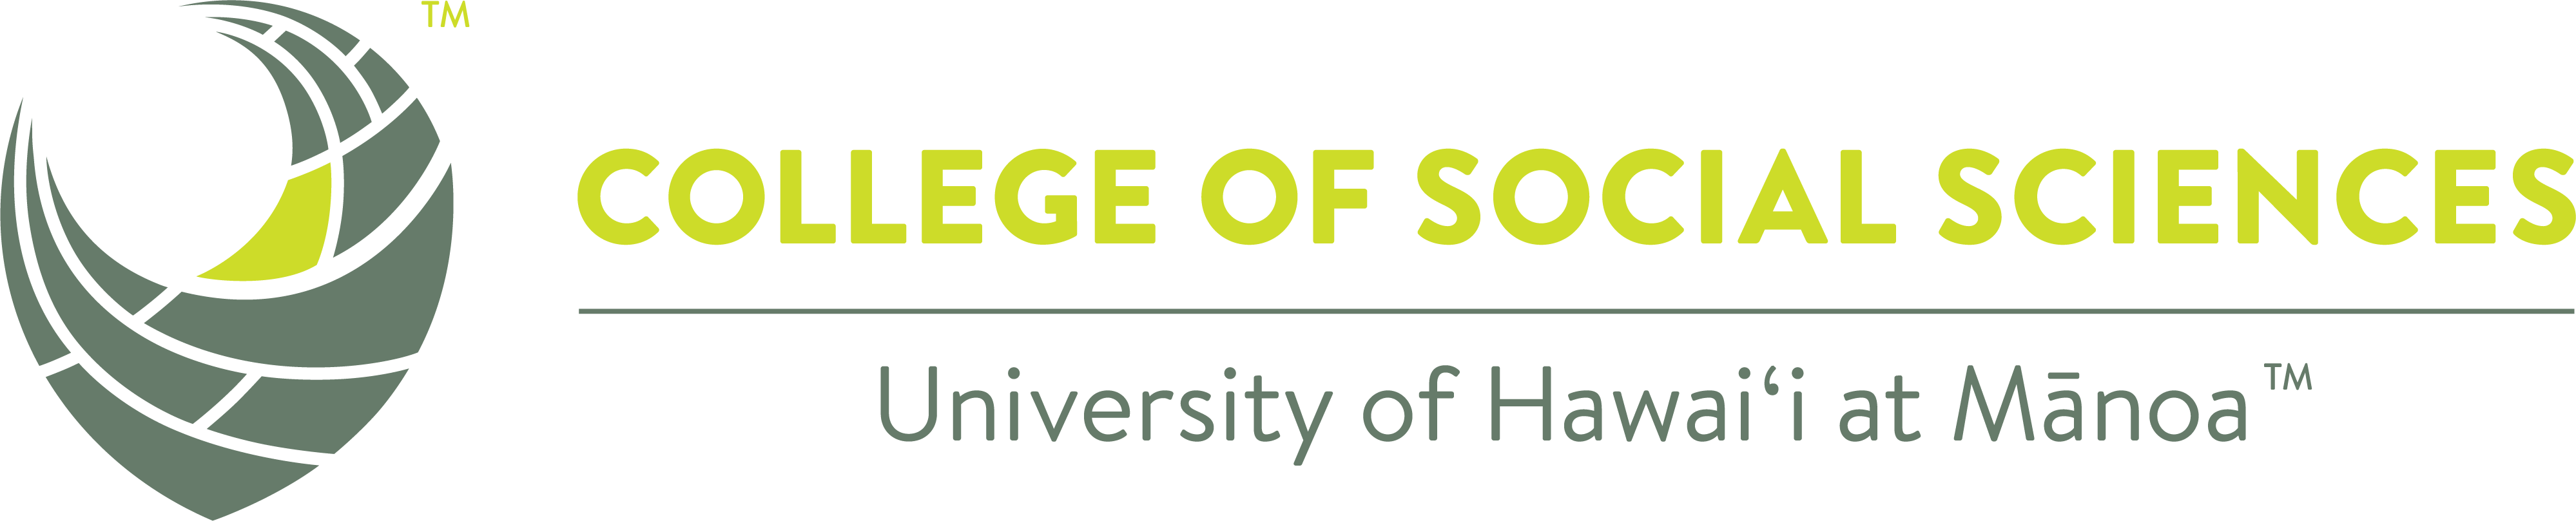 College of Social Sciences